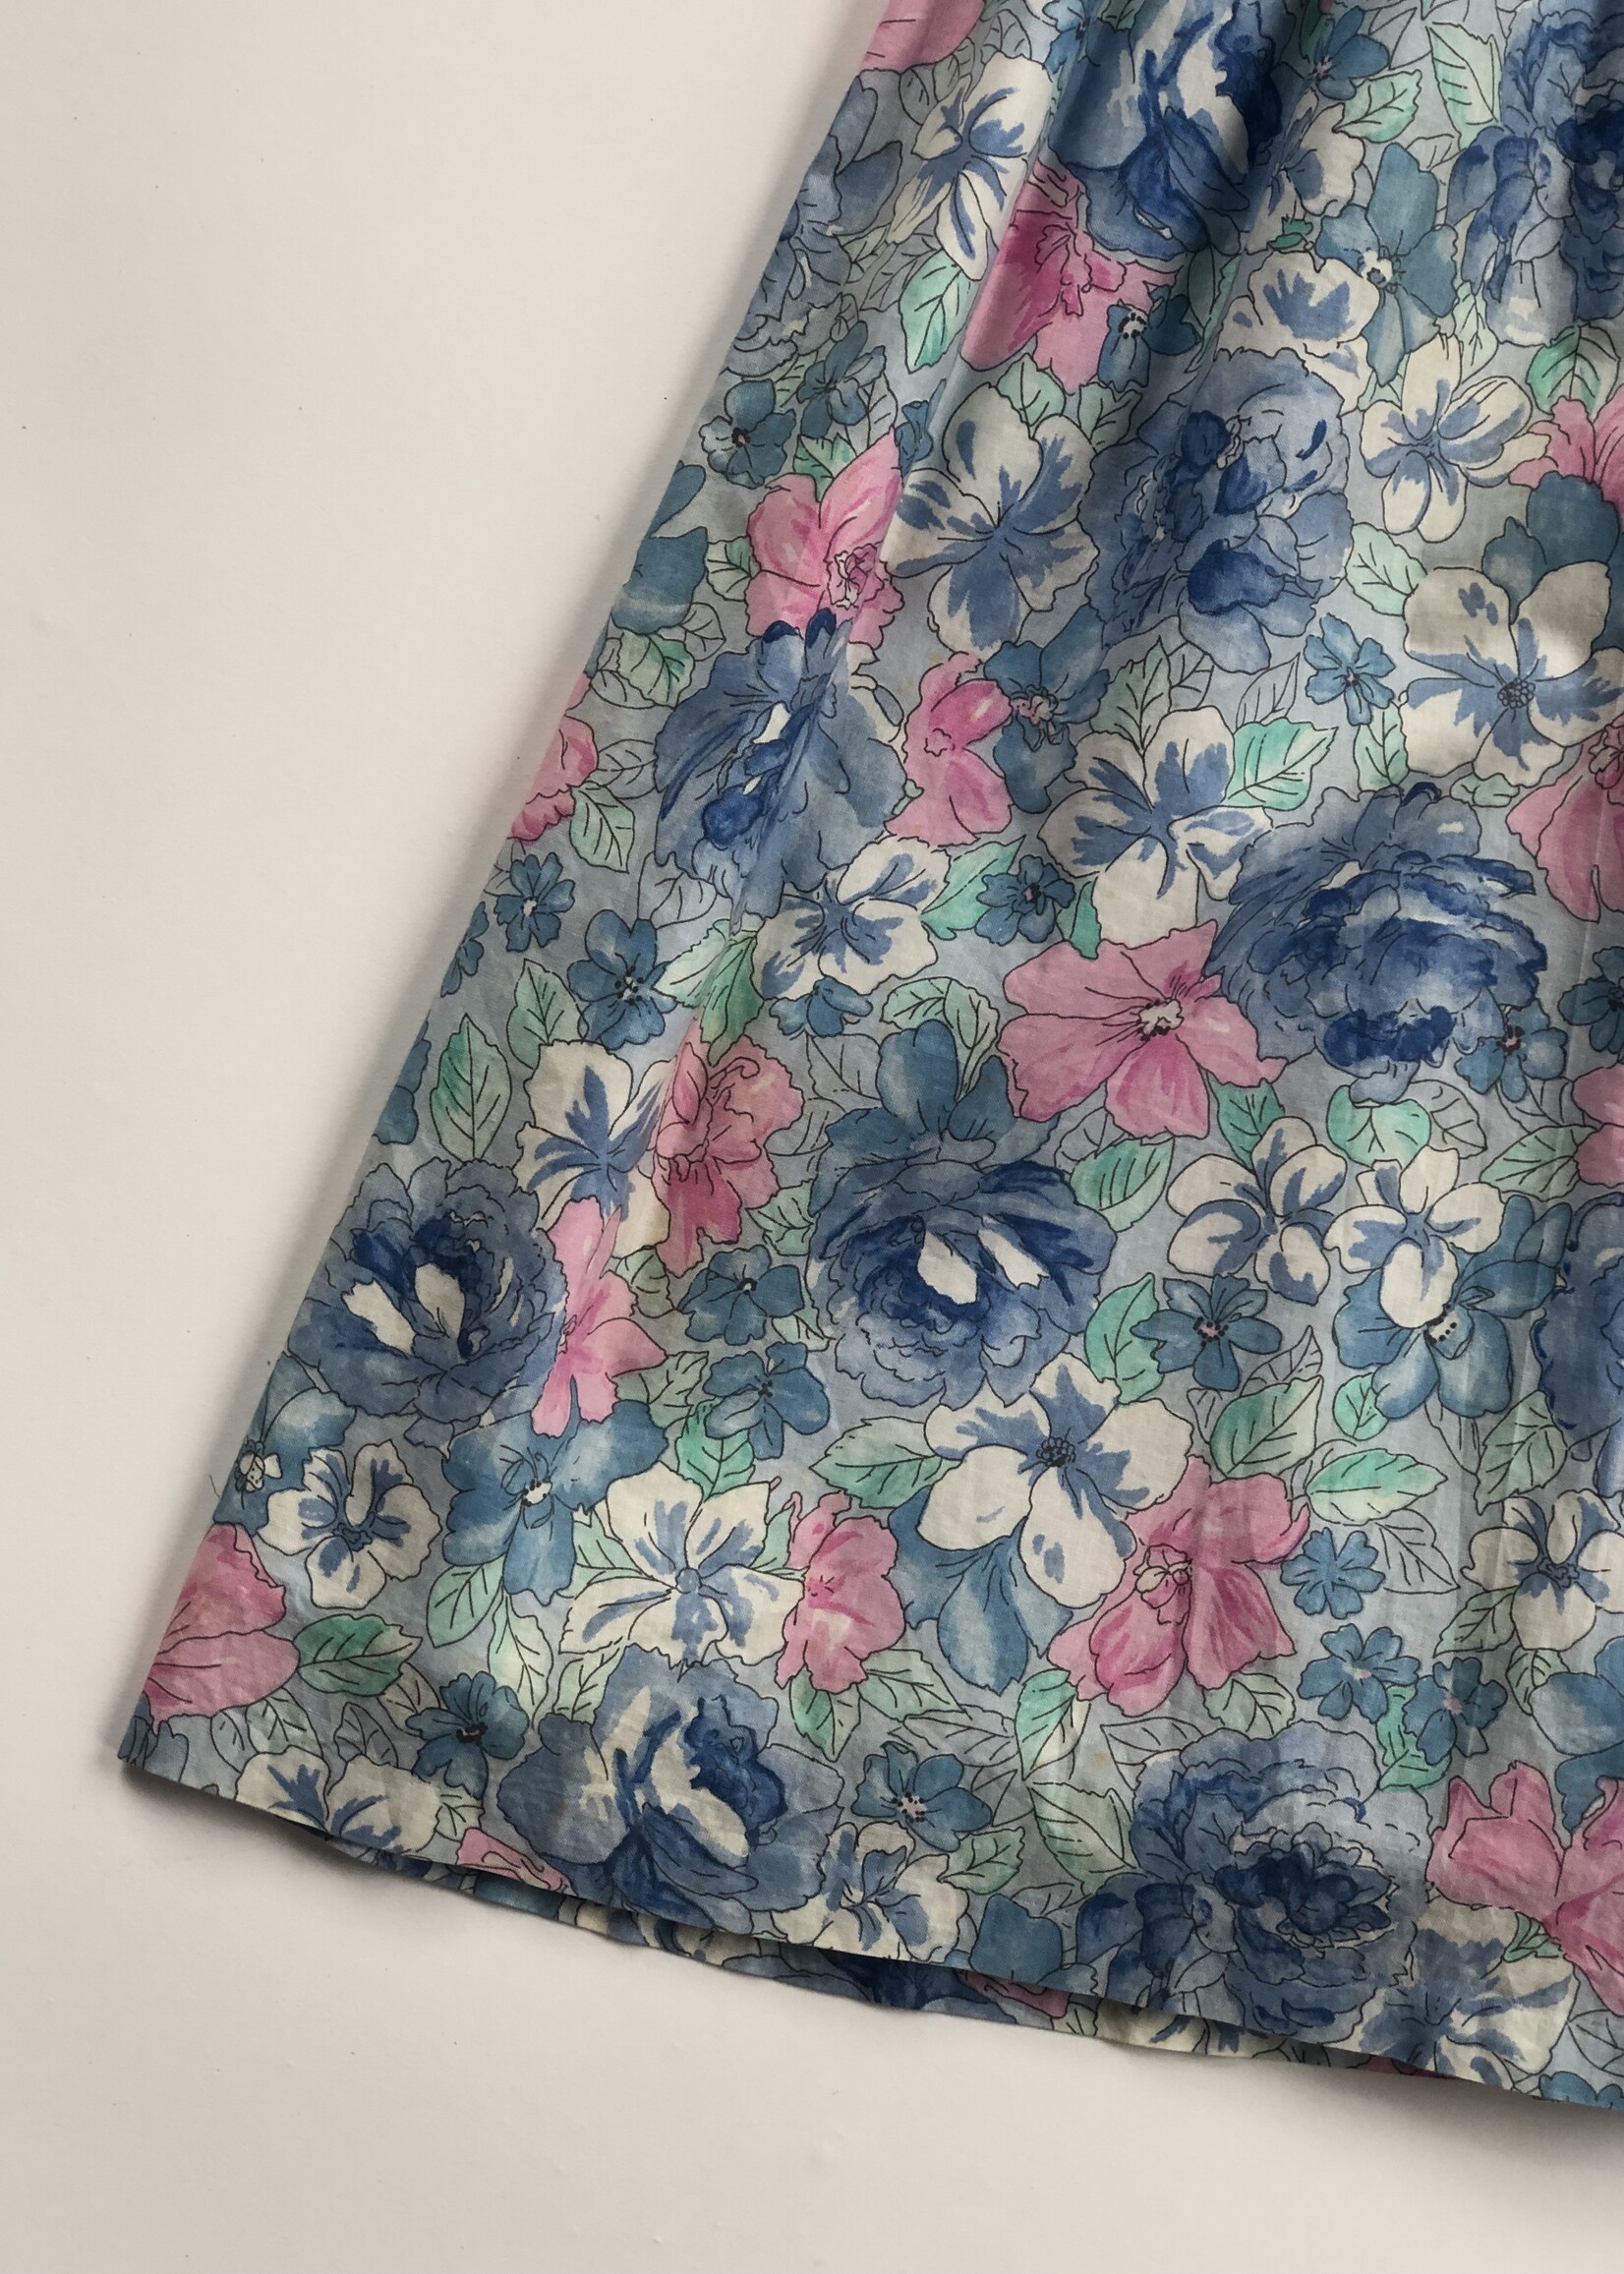 Vintage Blue and pink floral dress 8-9y